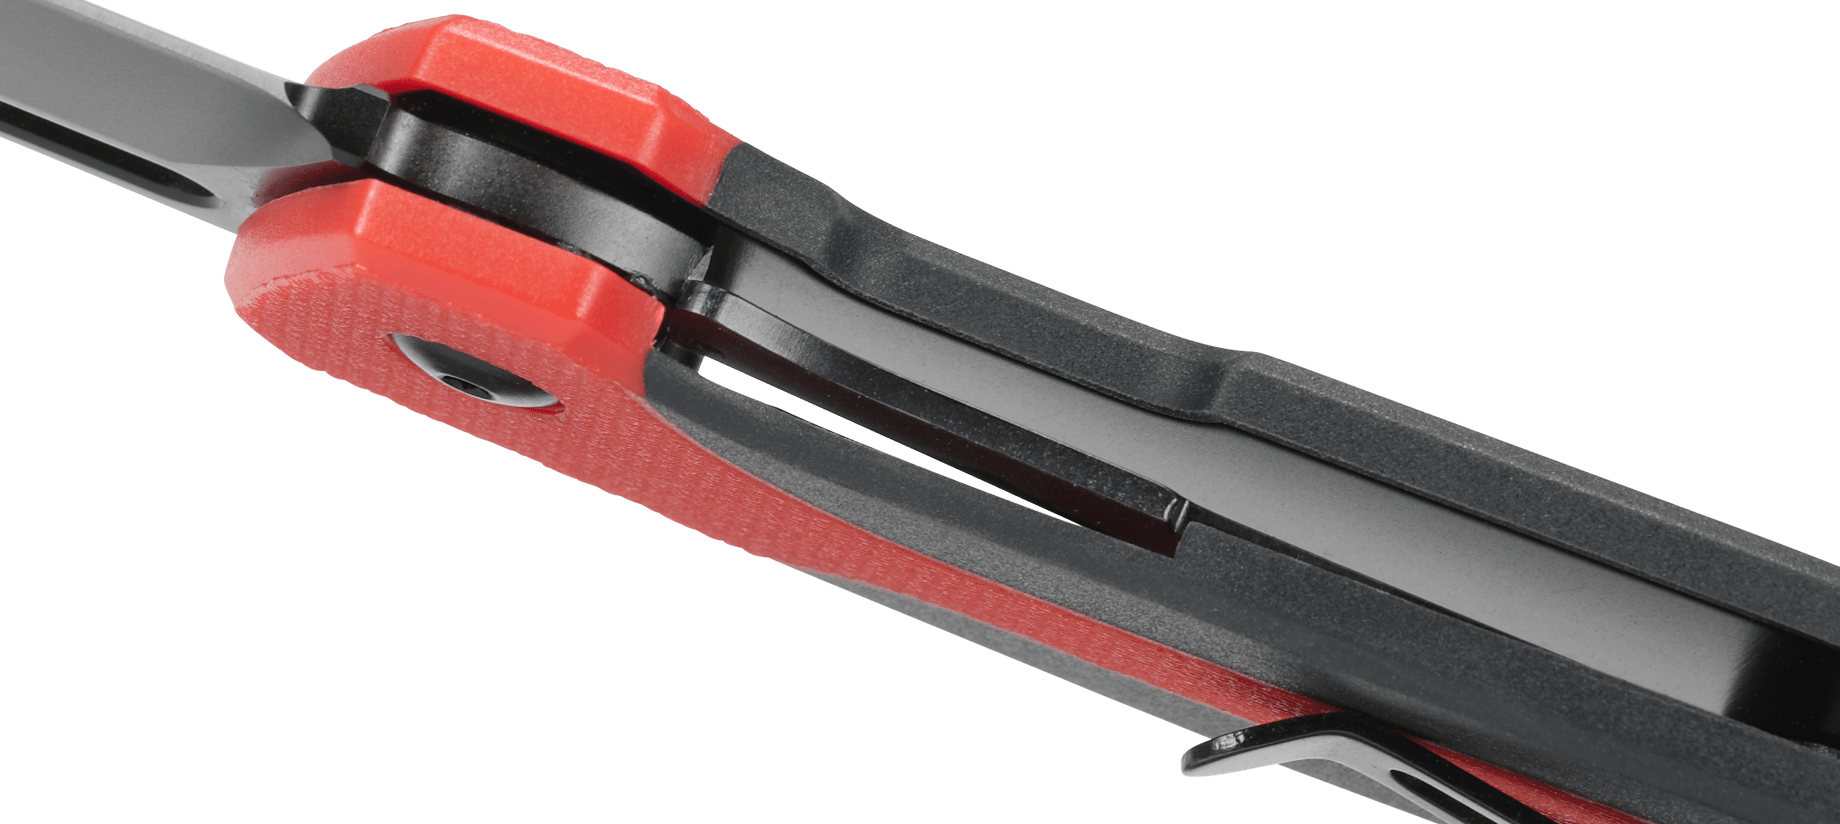 Складной нож CRKT Sketch™ Red, сталь 8Cr13MoV, рукоять ABS пластик - фото 8